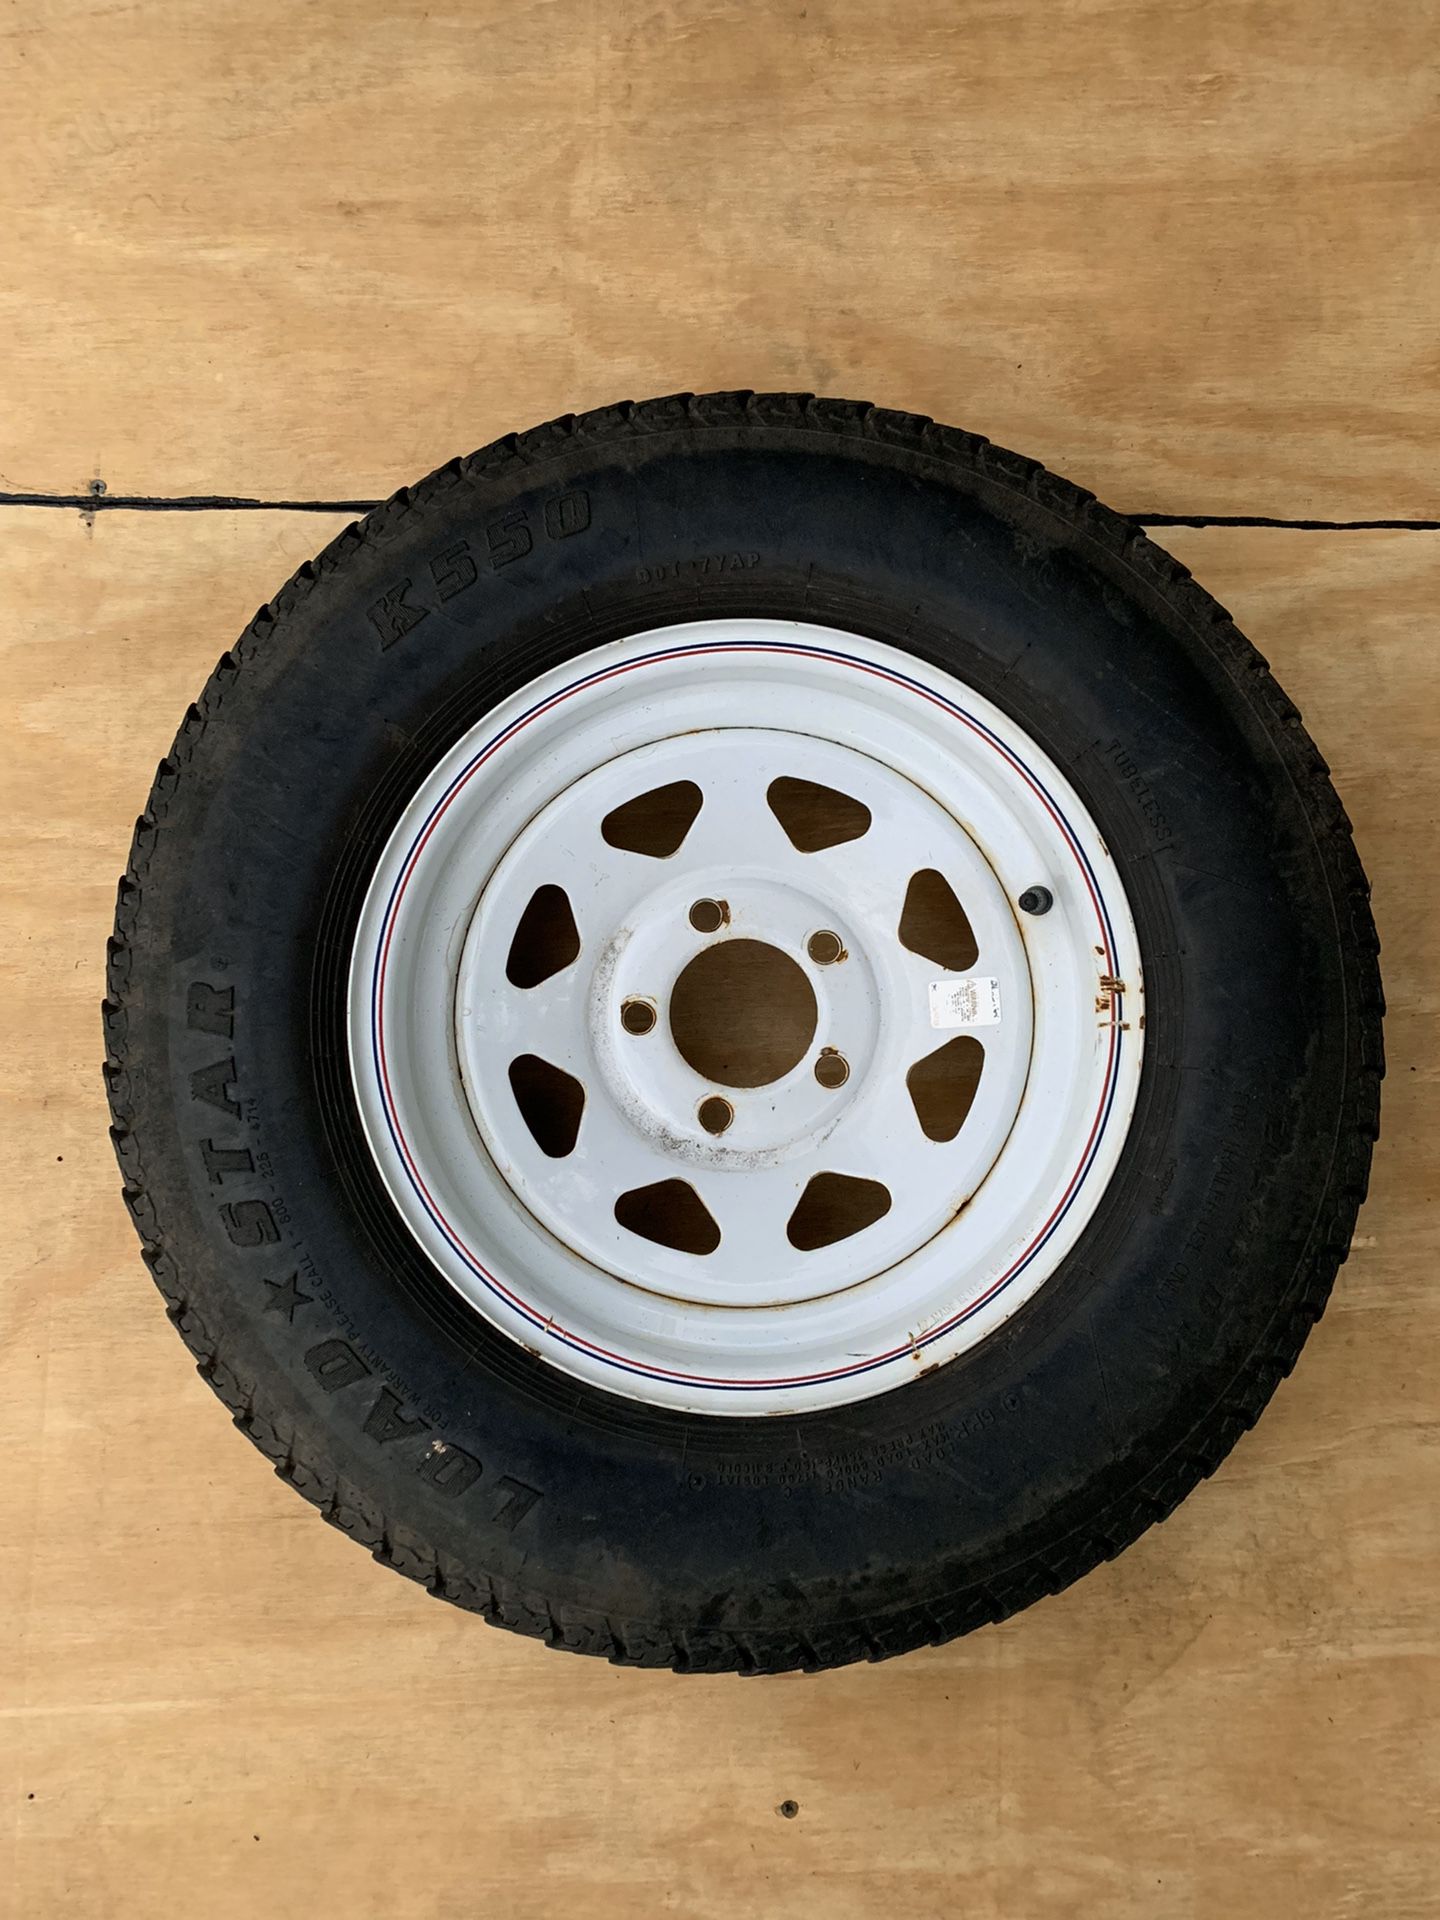 14” 5 lug trailer wheel tire